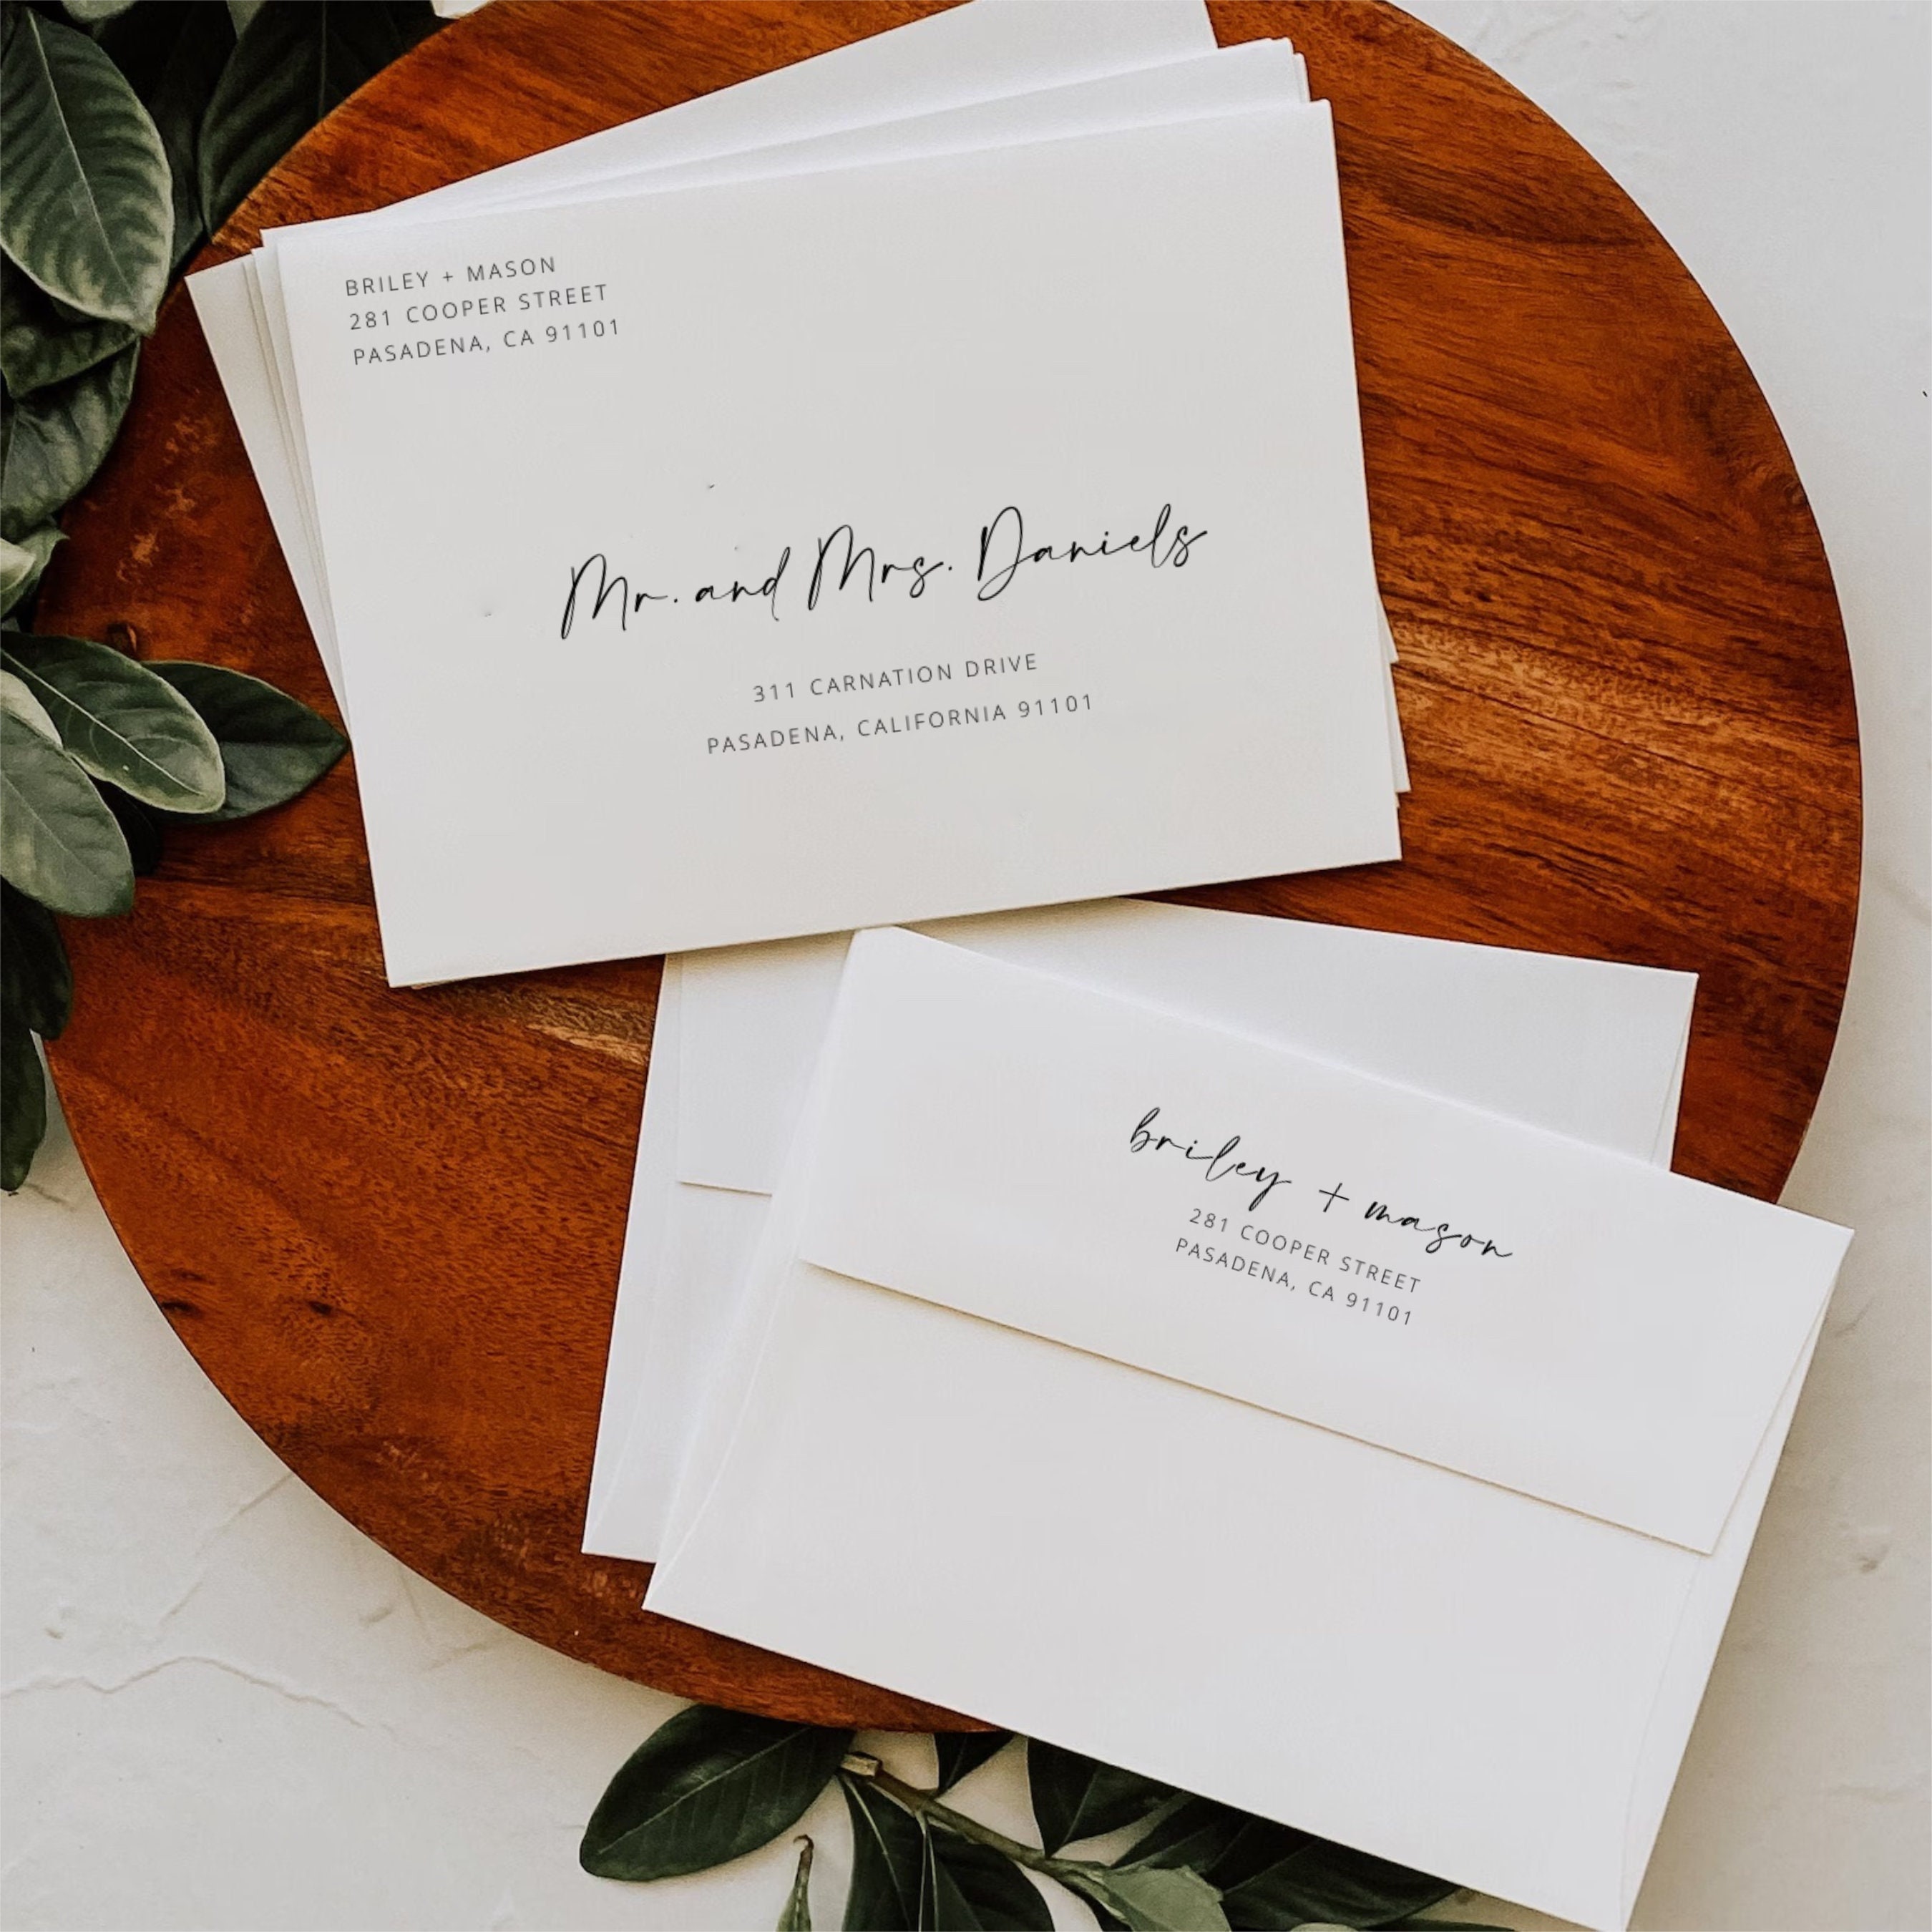 Gold Glitter A7 Invitation Letter Envelopes for Wedding, Bulk Mailers –  Pipilo Press